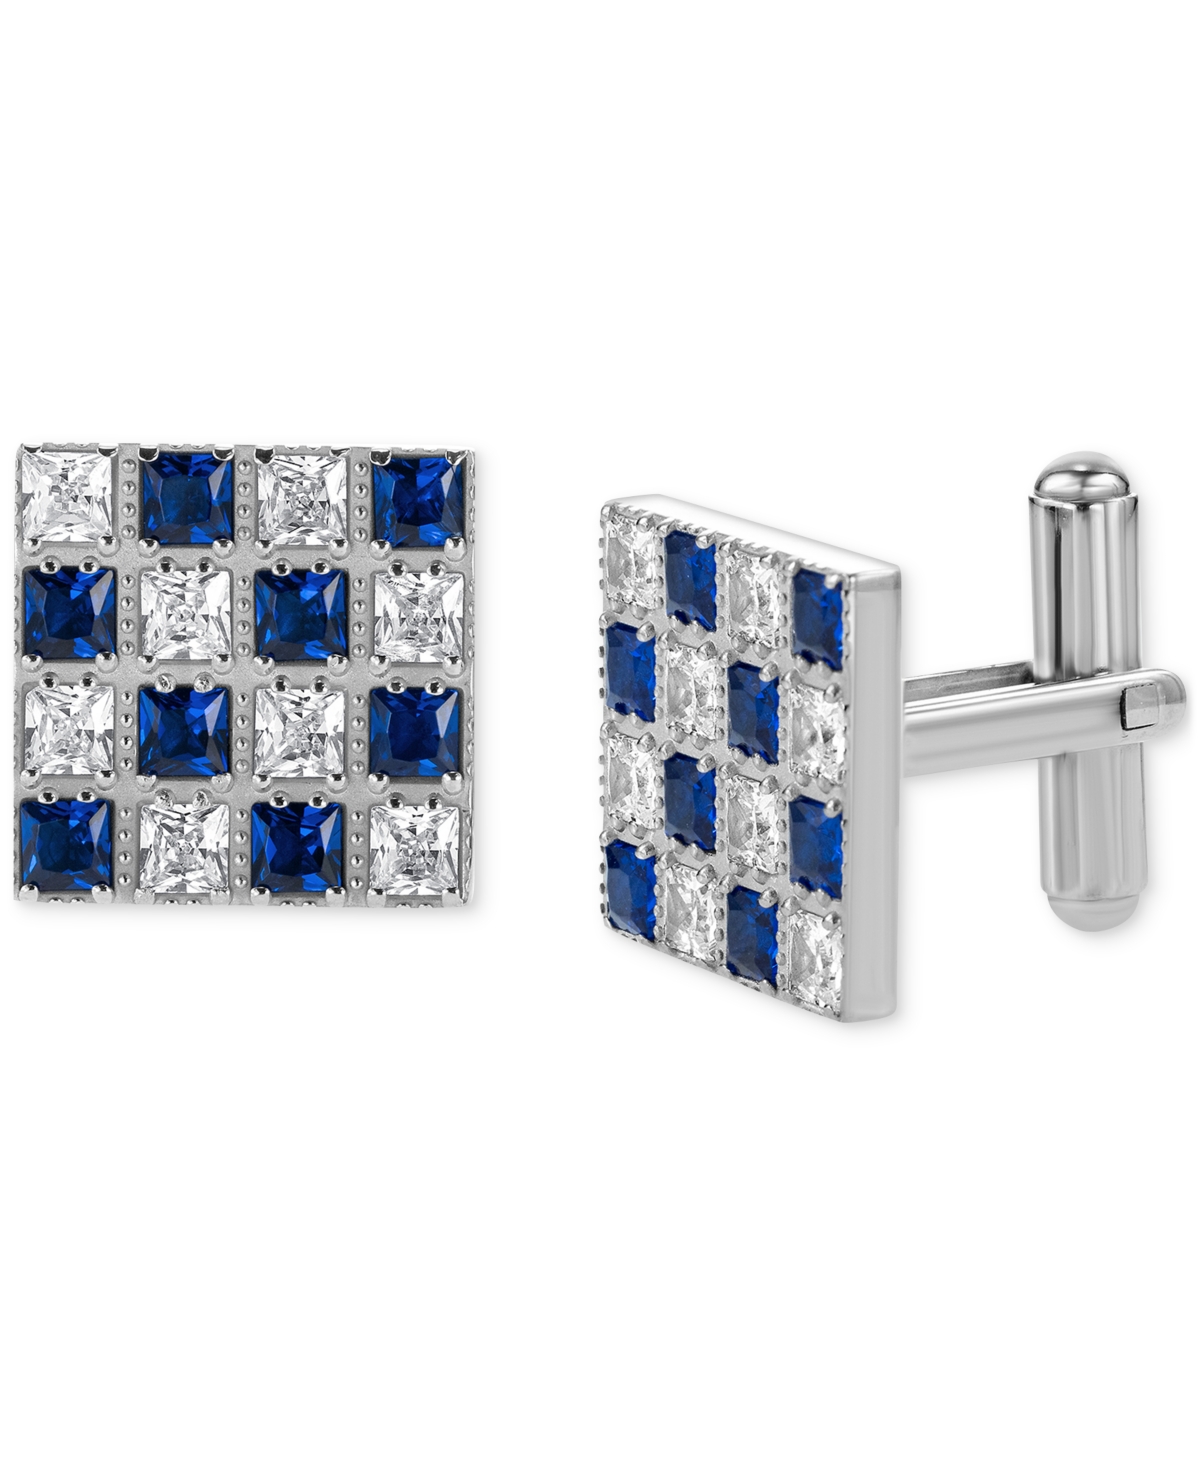 Blackjack Men's Cubic Zirconia Checkerboard Square Cufflinks In Stainless Steel In Blue